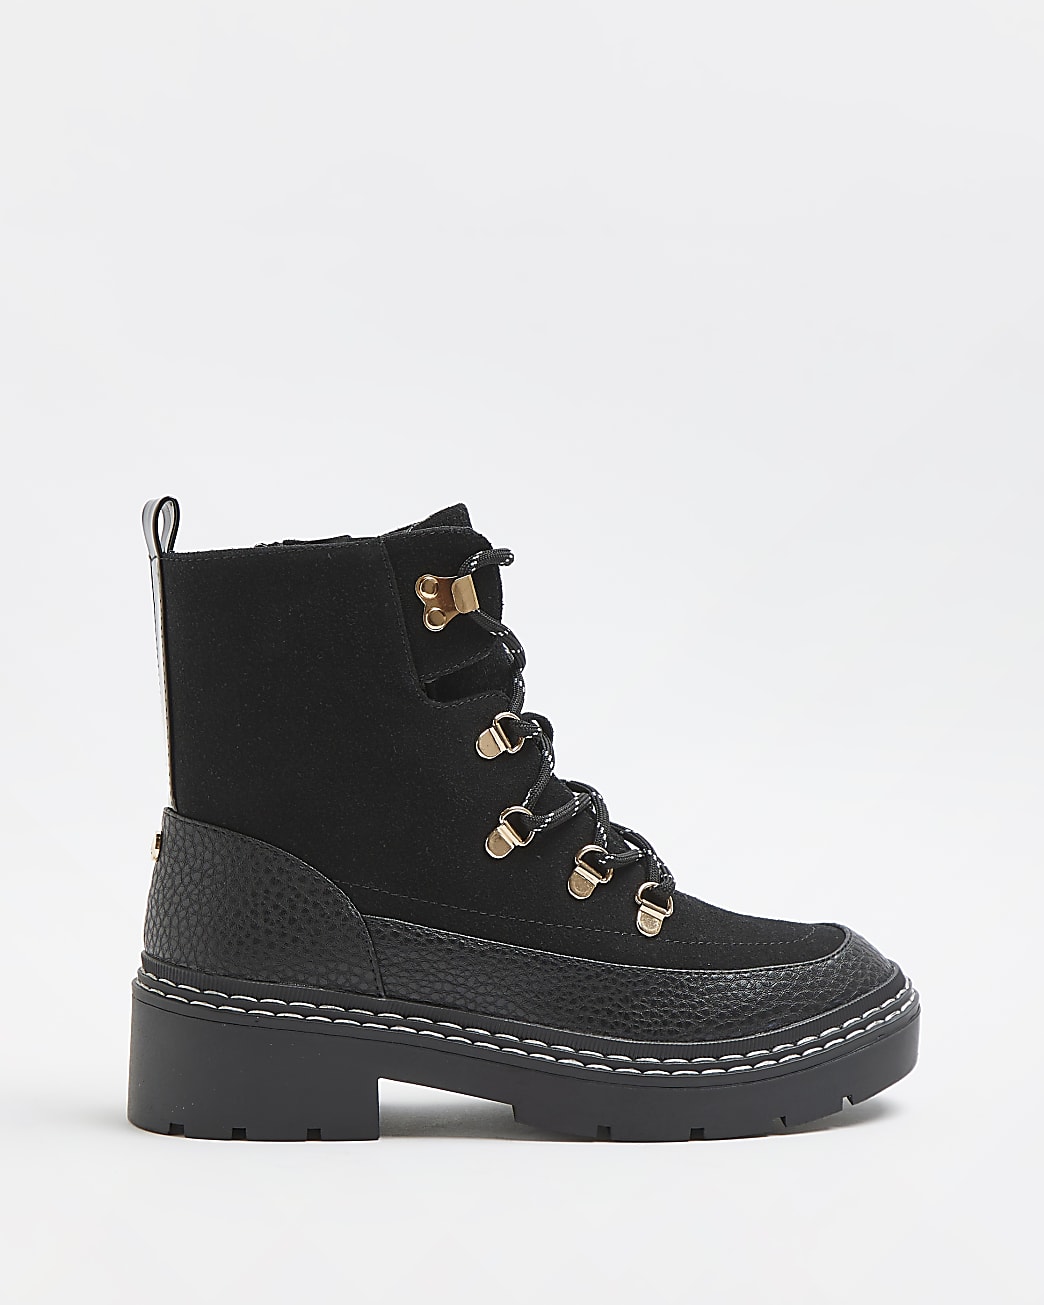 Black hiker boots